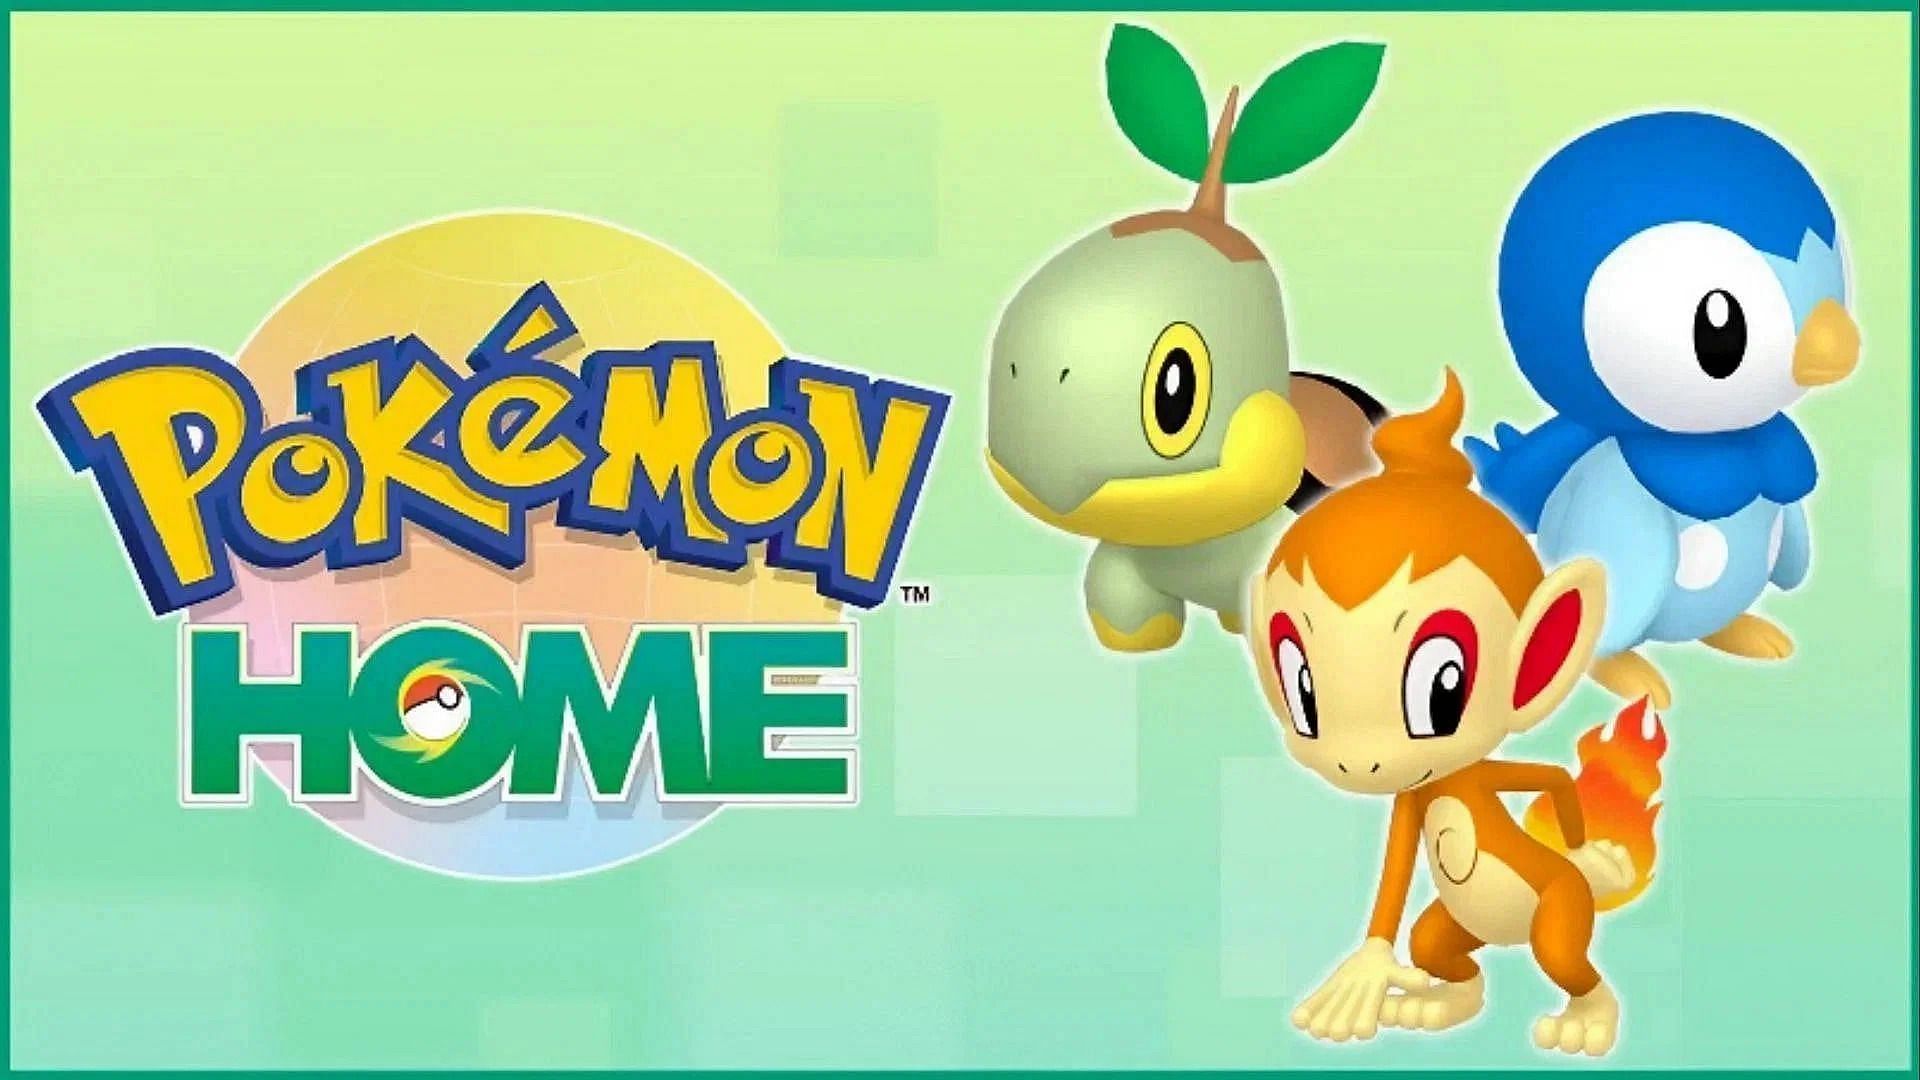 Pokemon HOME version 3.1.2 update